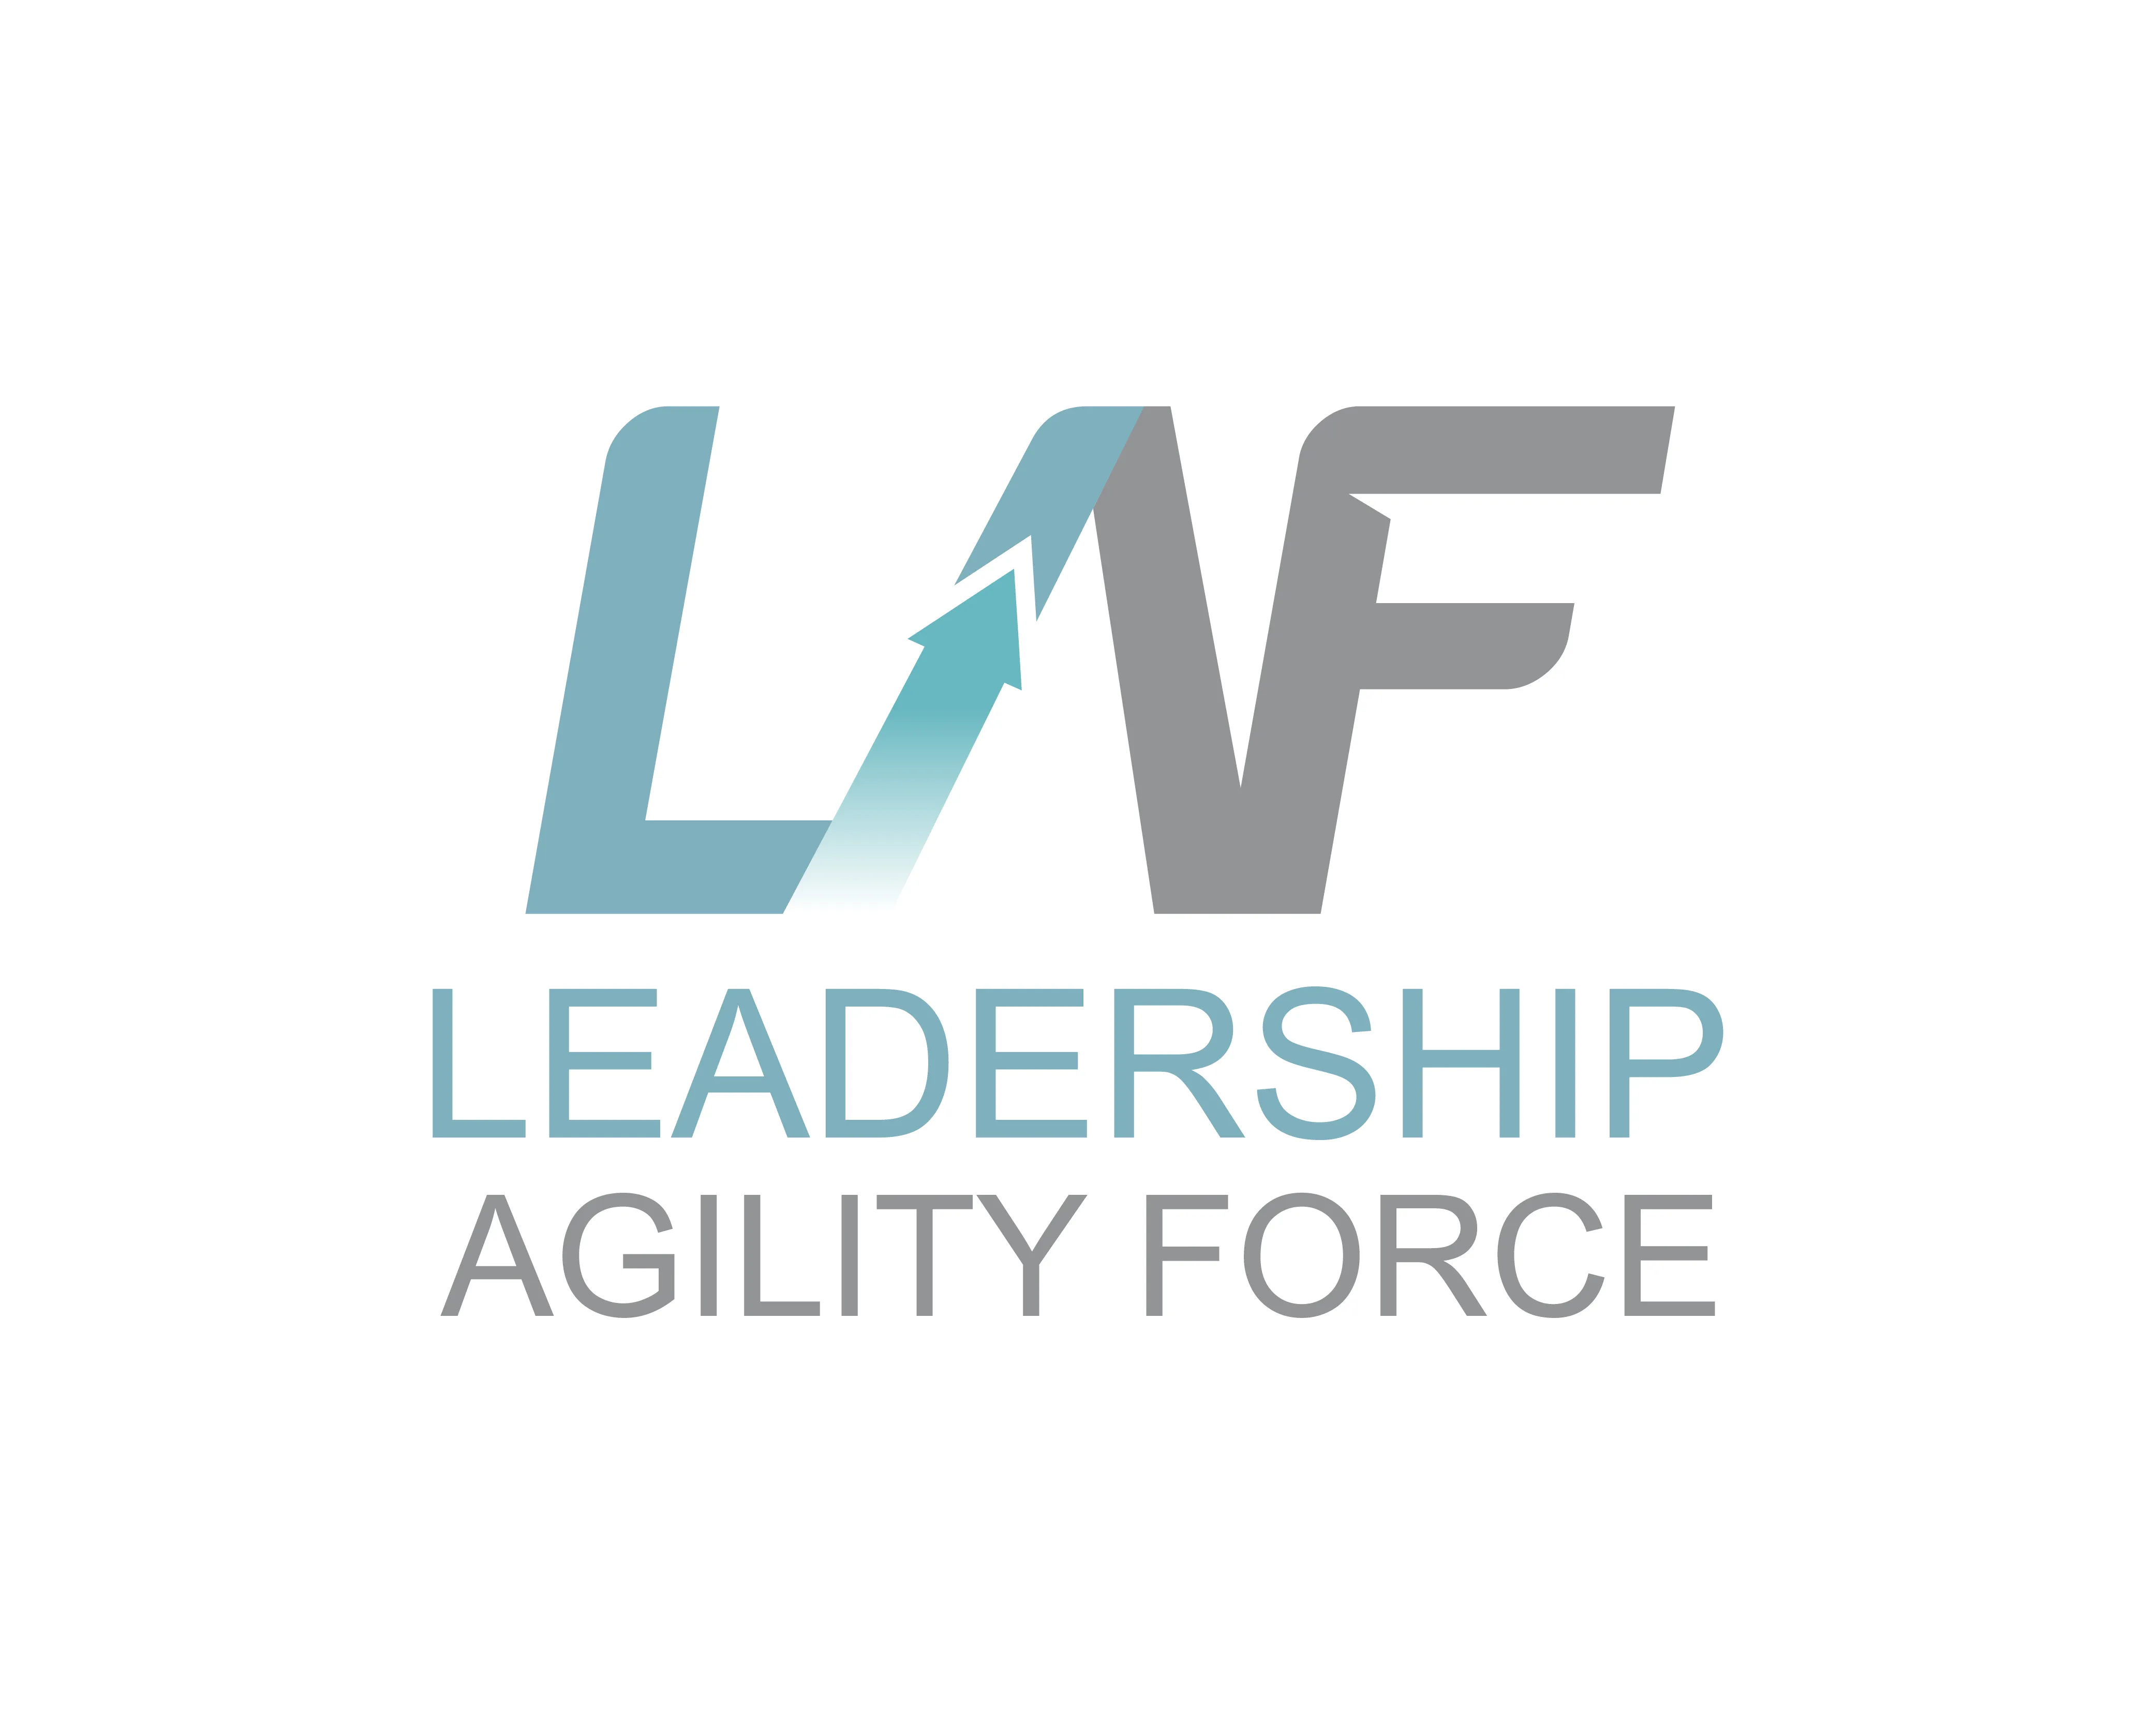 Leadership Agility Force, a community for agile leaders